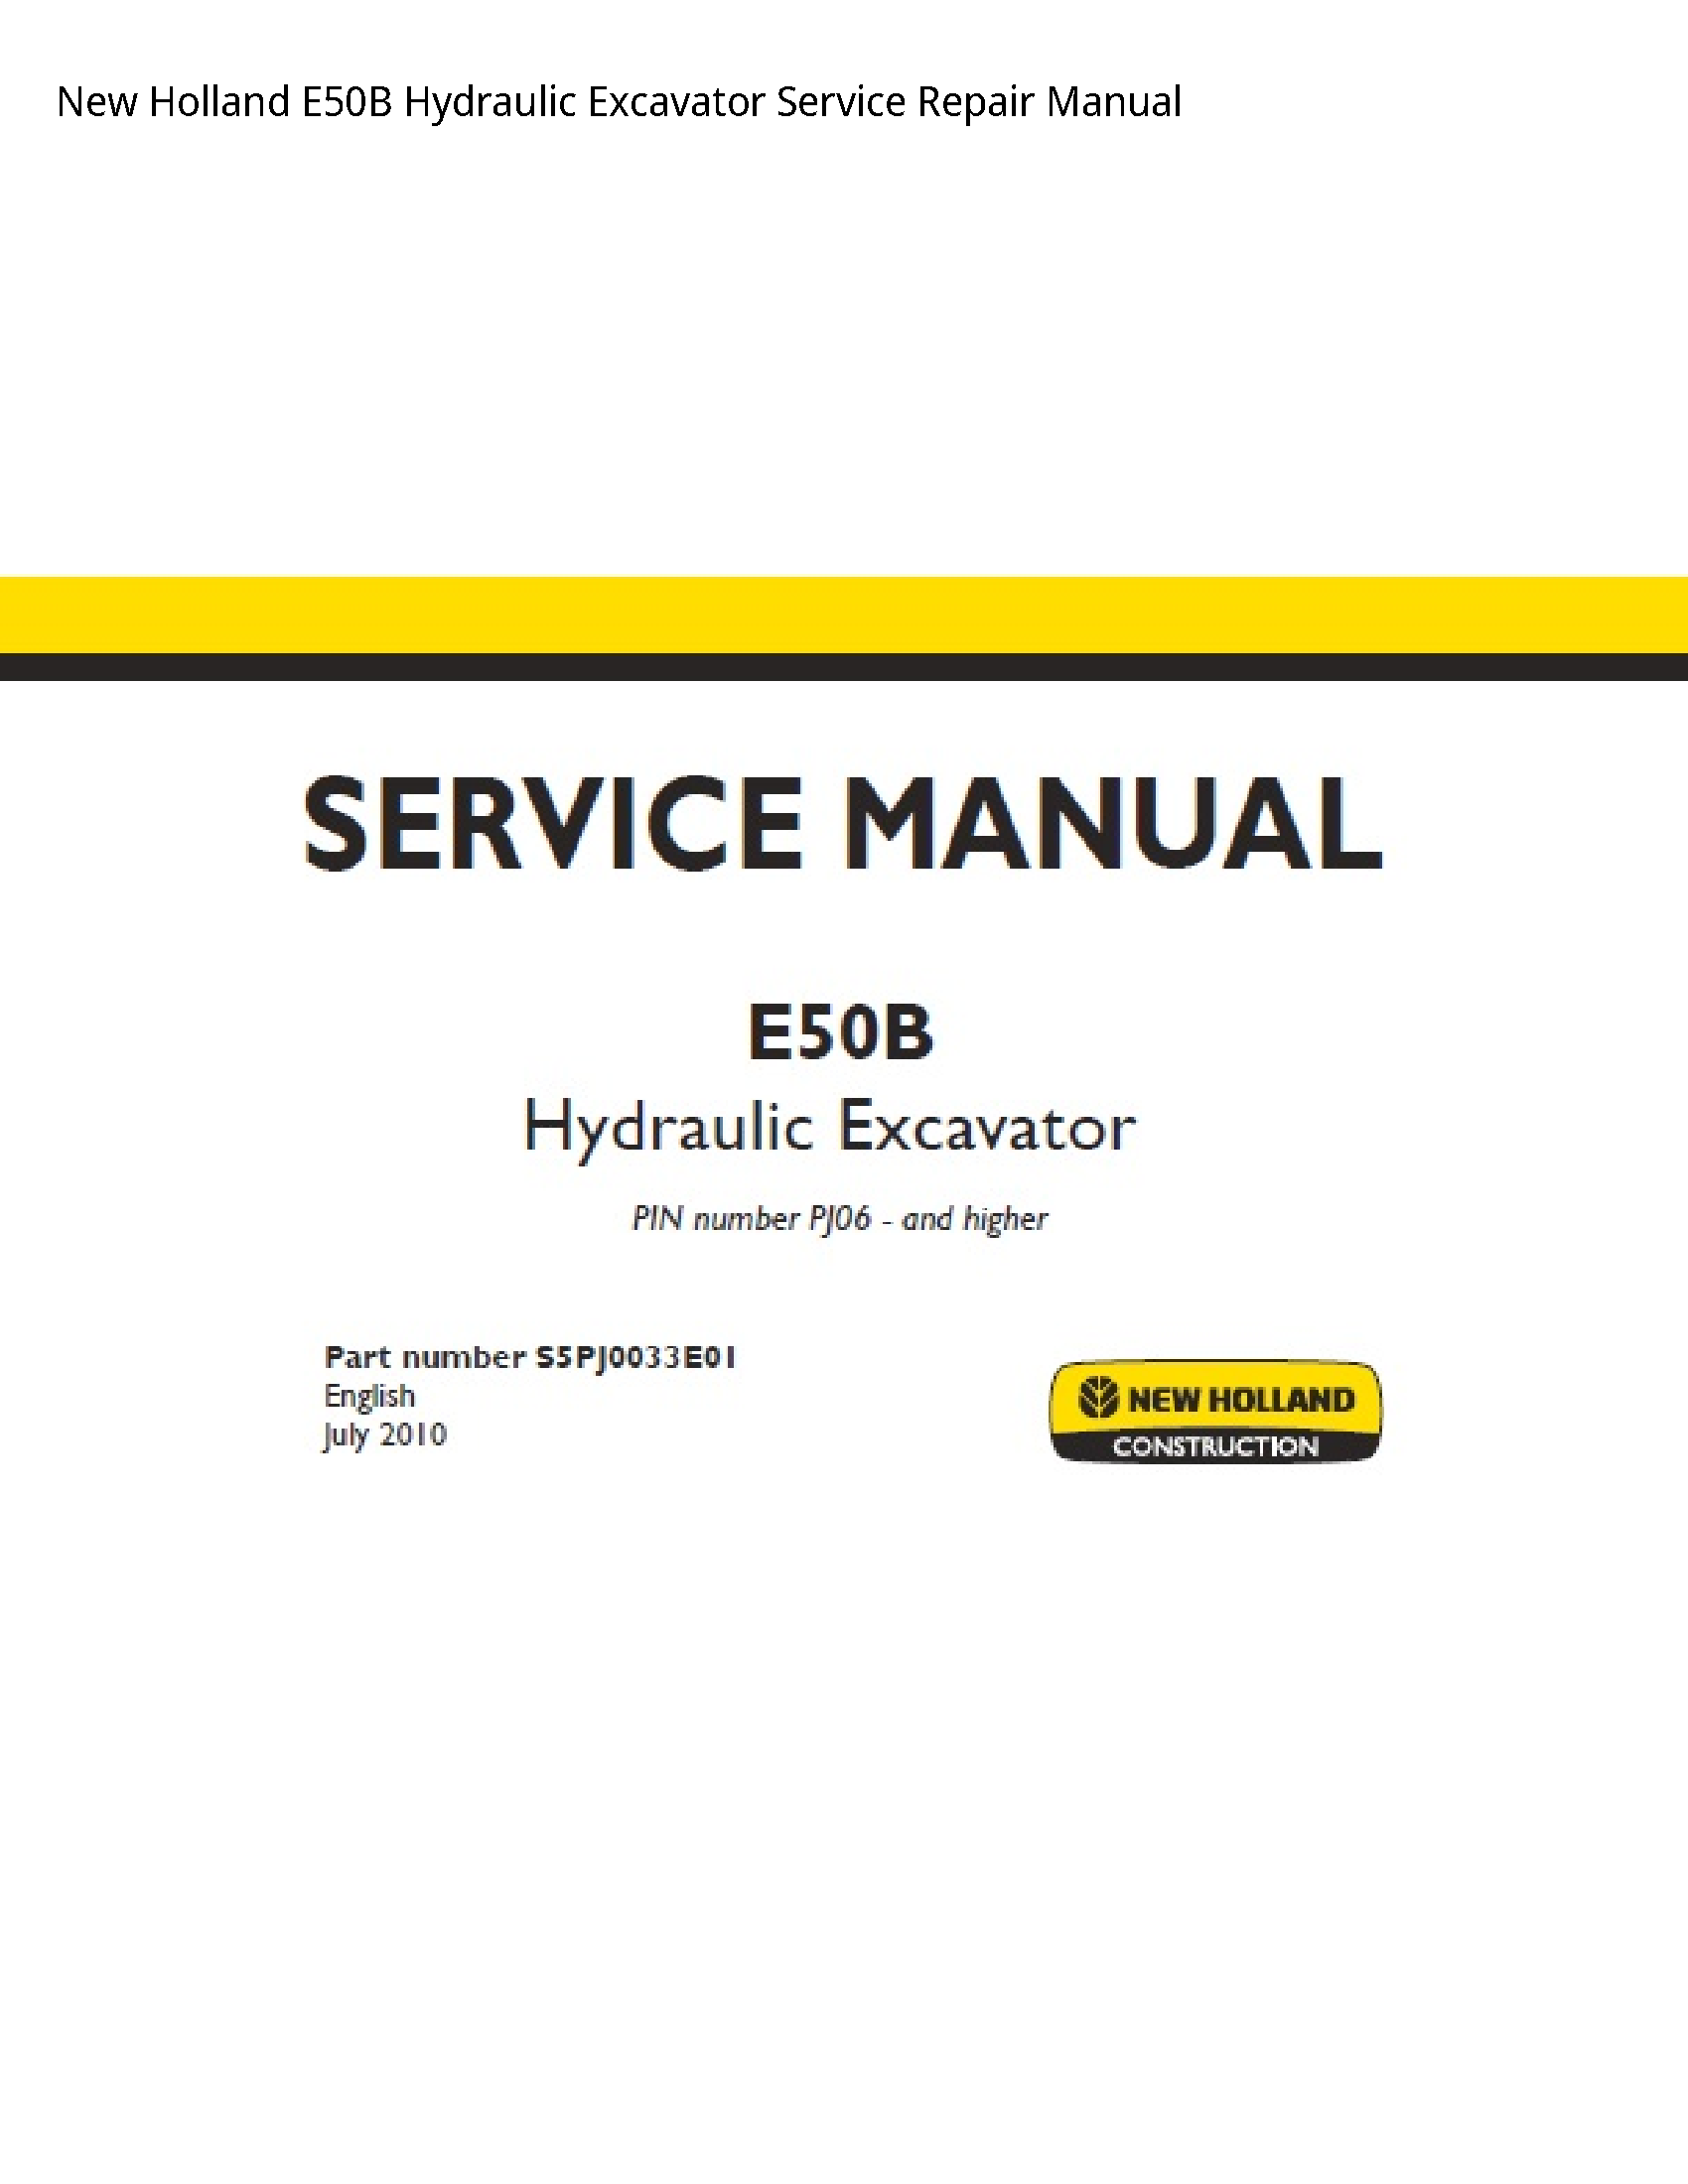 New Holland E50B Hydraulic Excavator manual